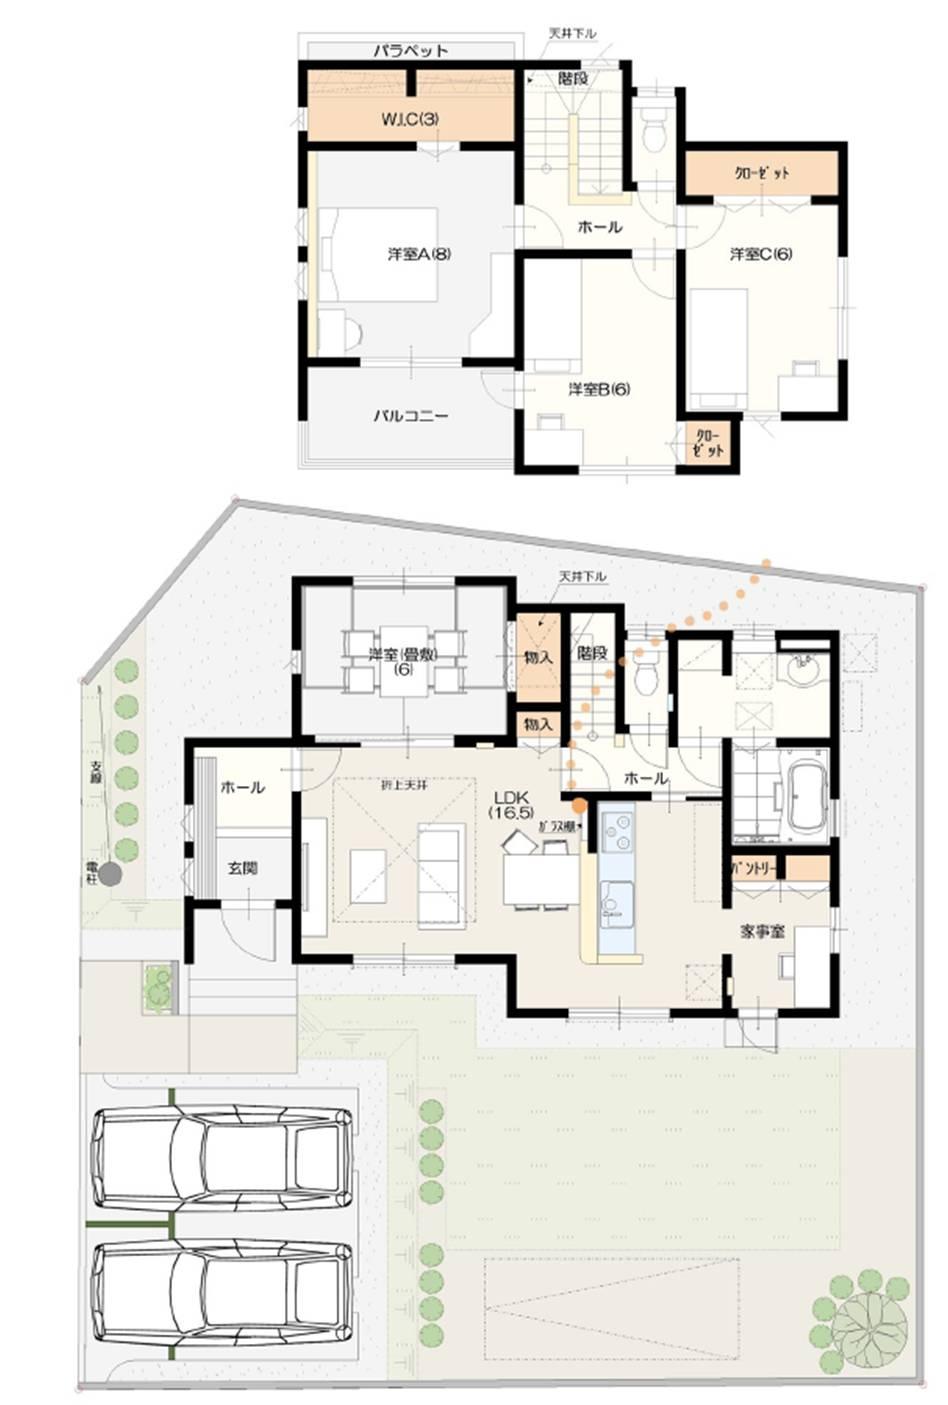 Floor plan. (No. 1 point), Price 29,300,000 yen, 4LDK, Land area 200 sq m , Building area 113.44 sq m